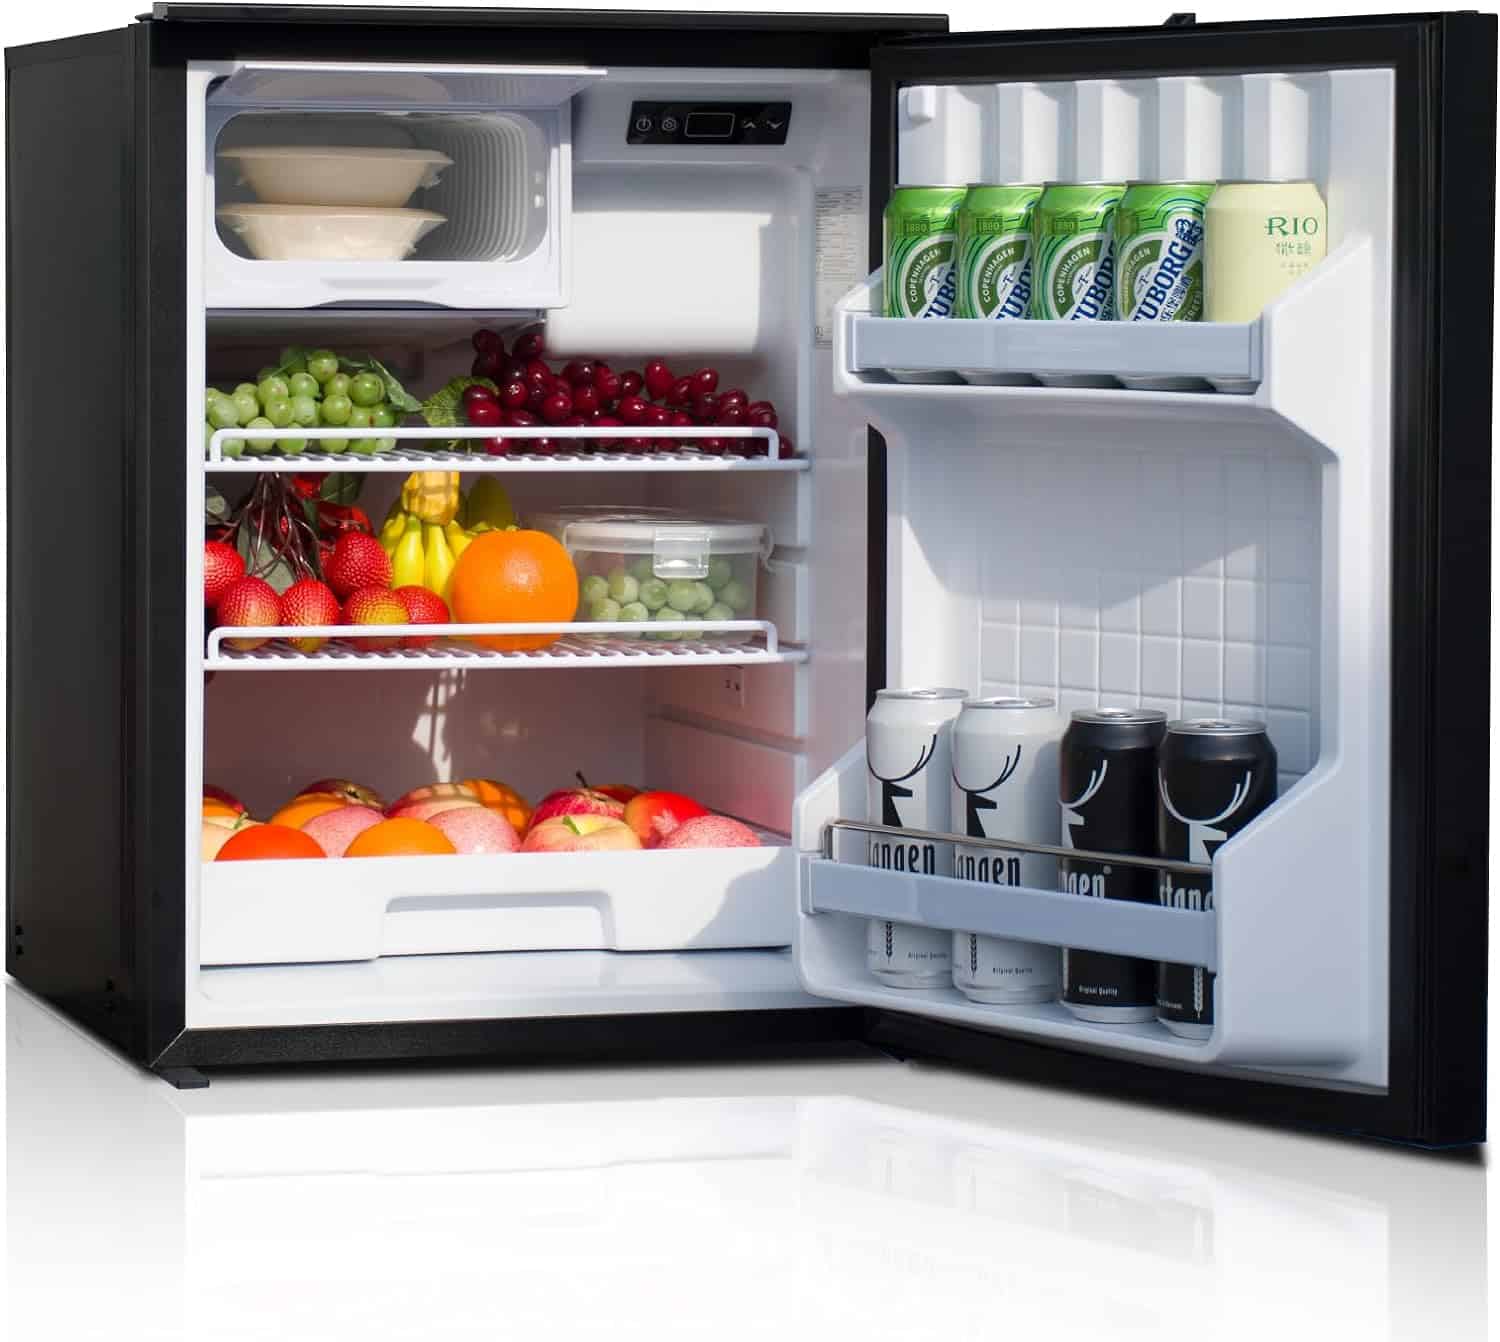 Refrigerators for Off-Grid